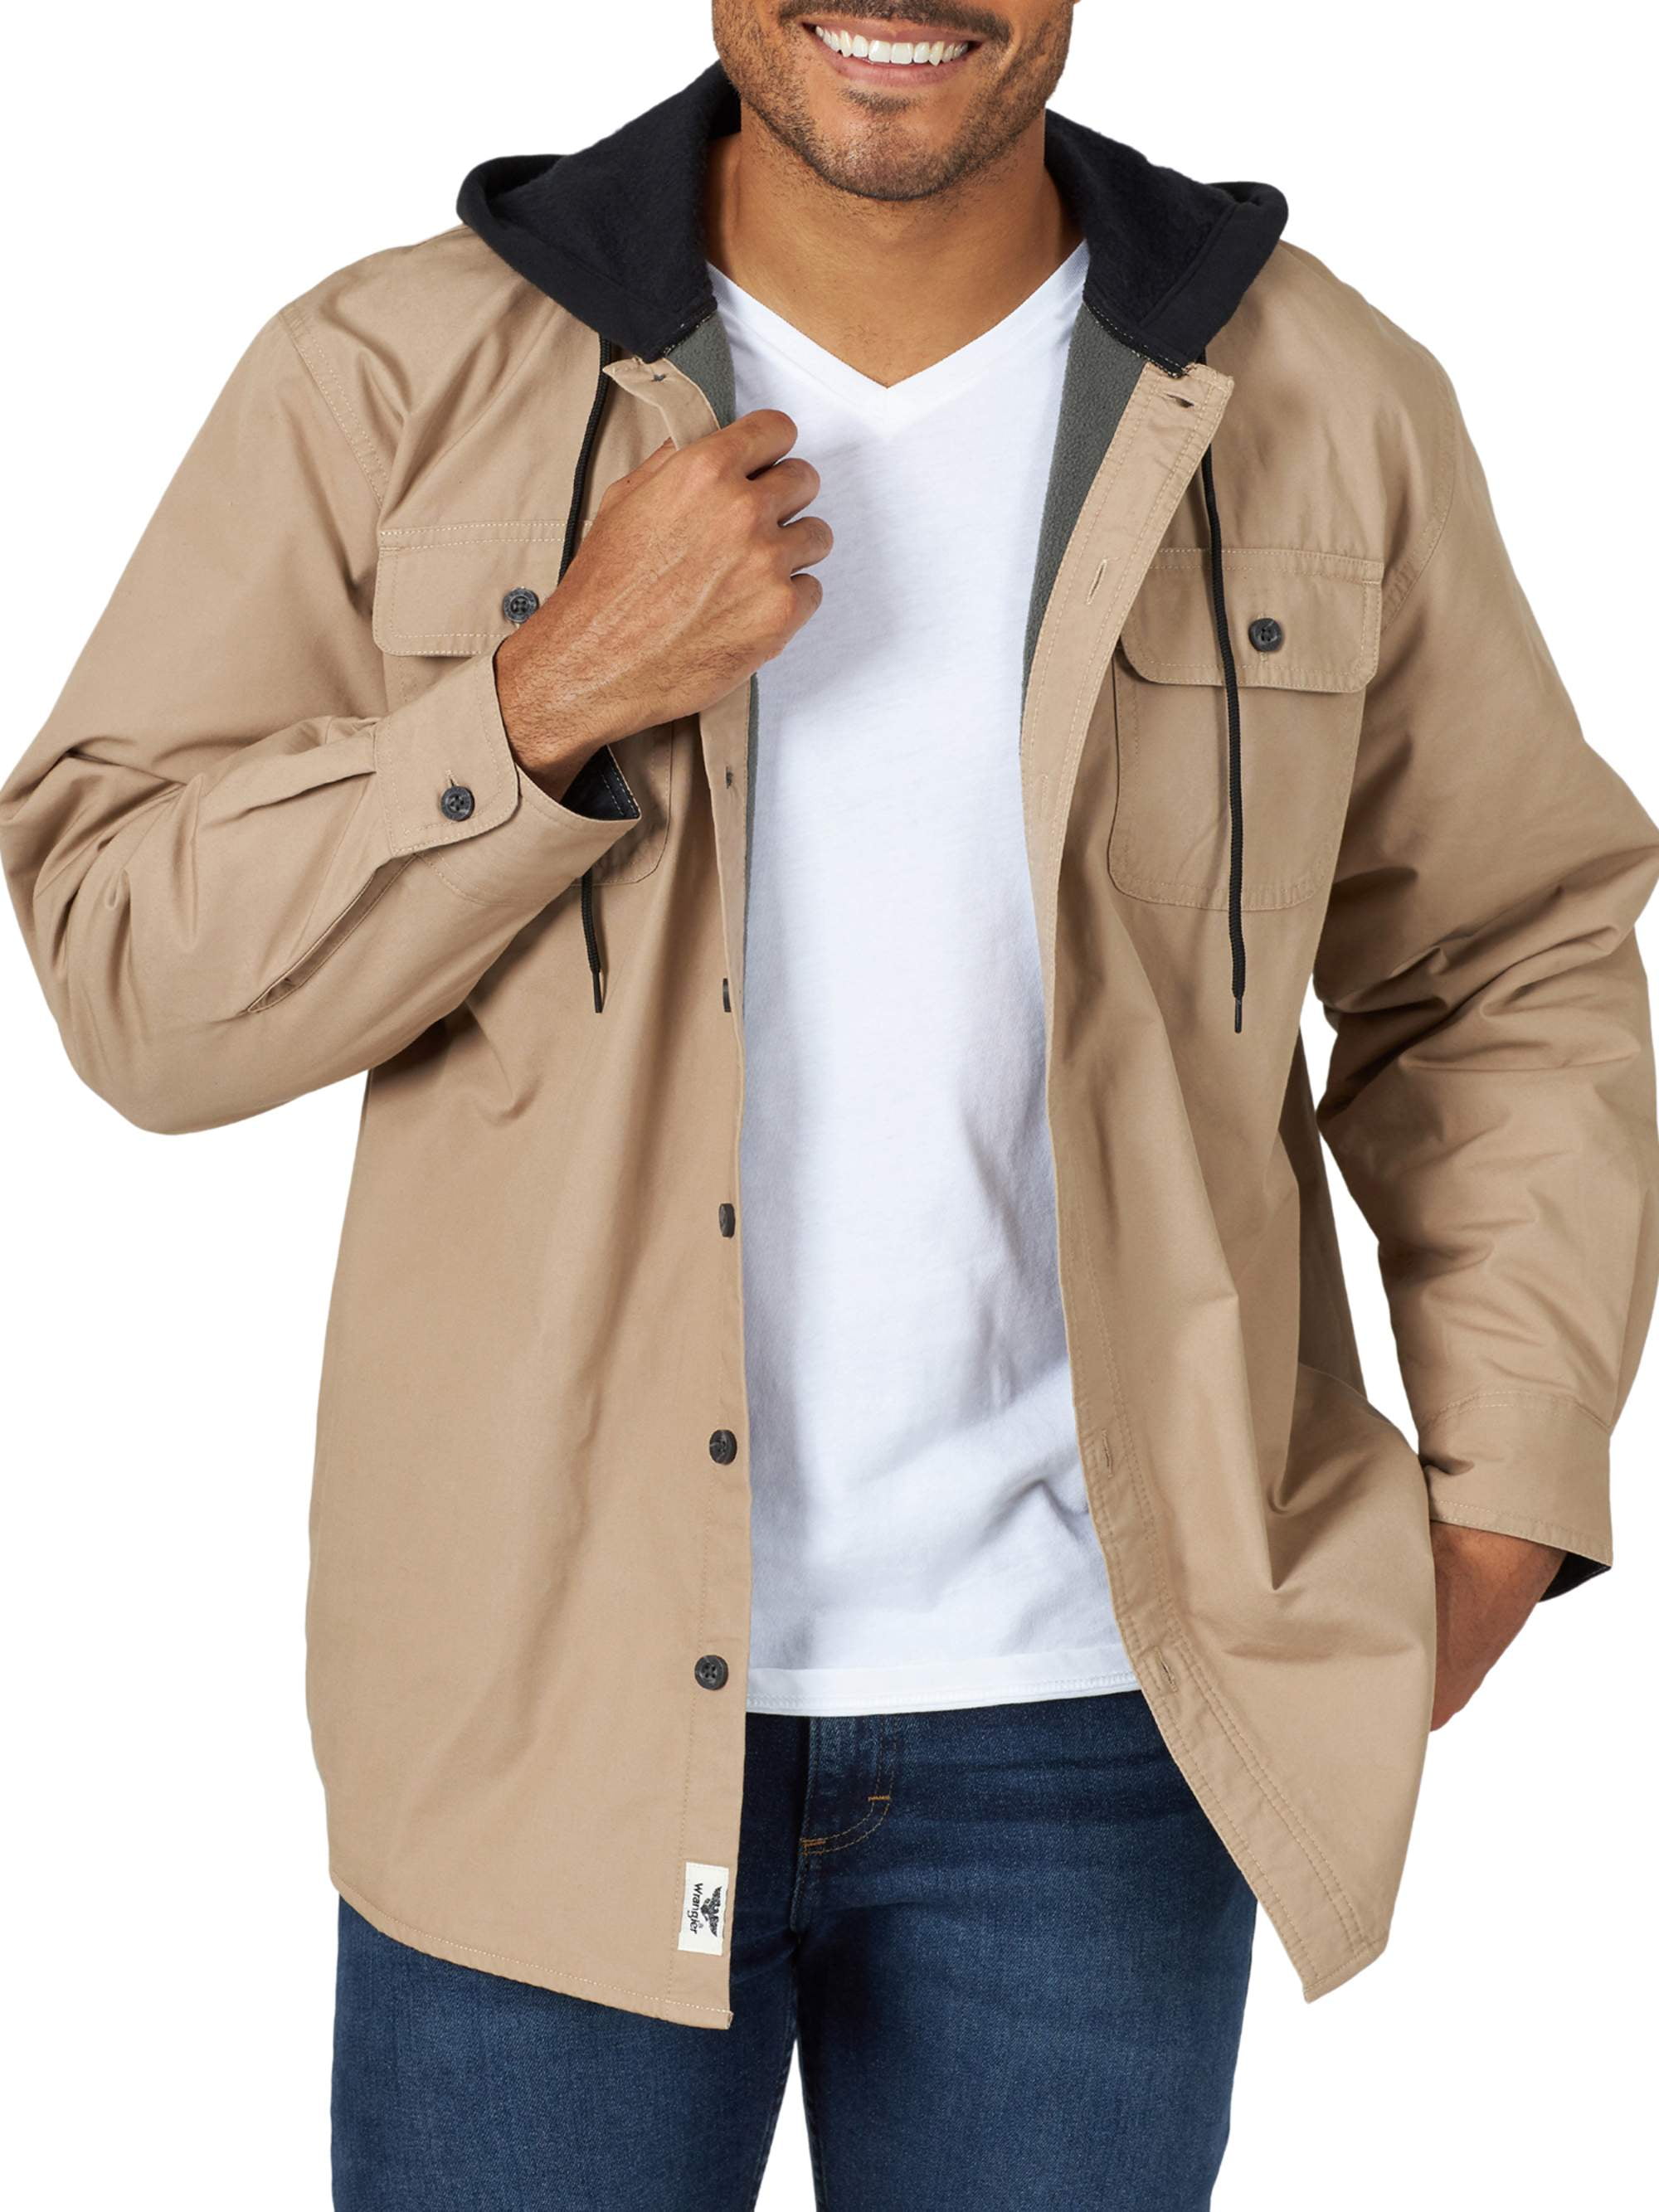 Wrangler Men's Fleece Lined Shirt Jacket 